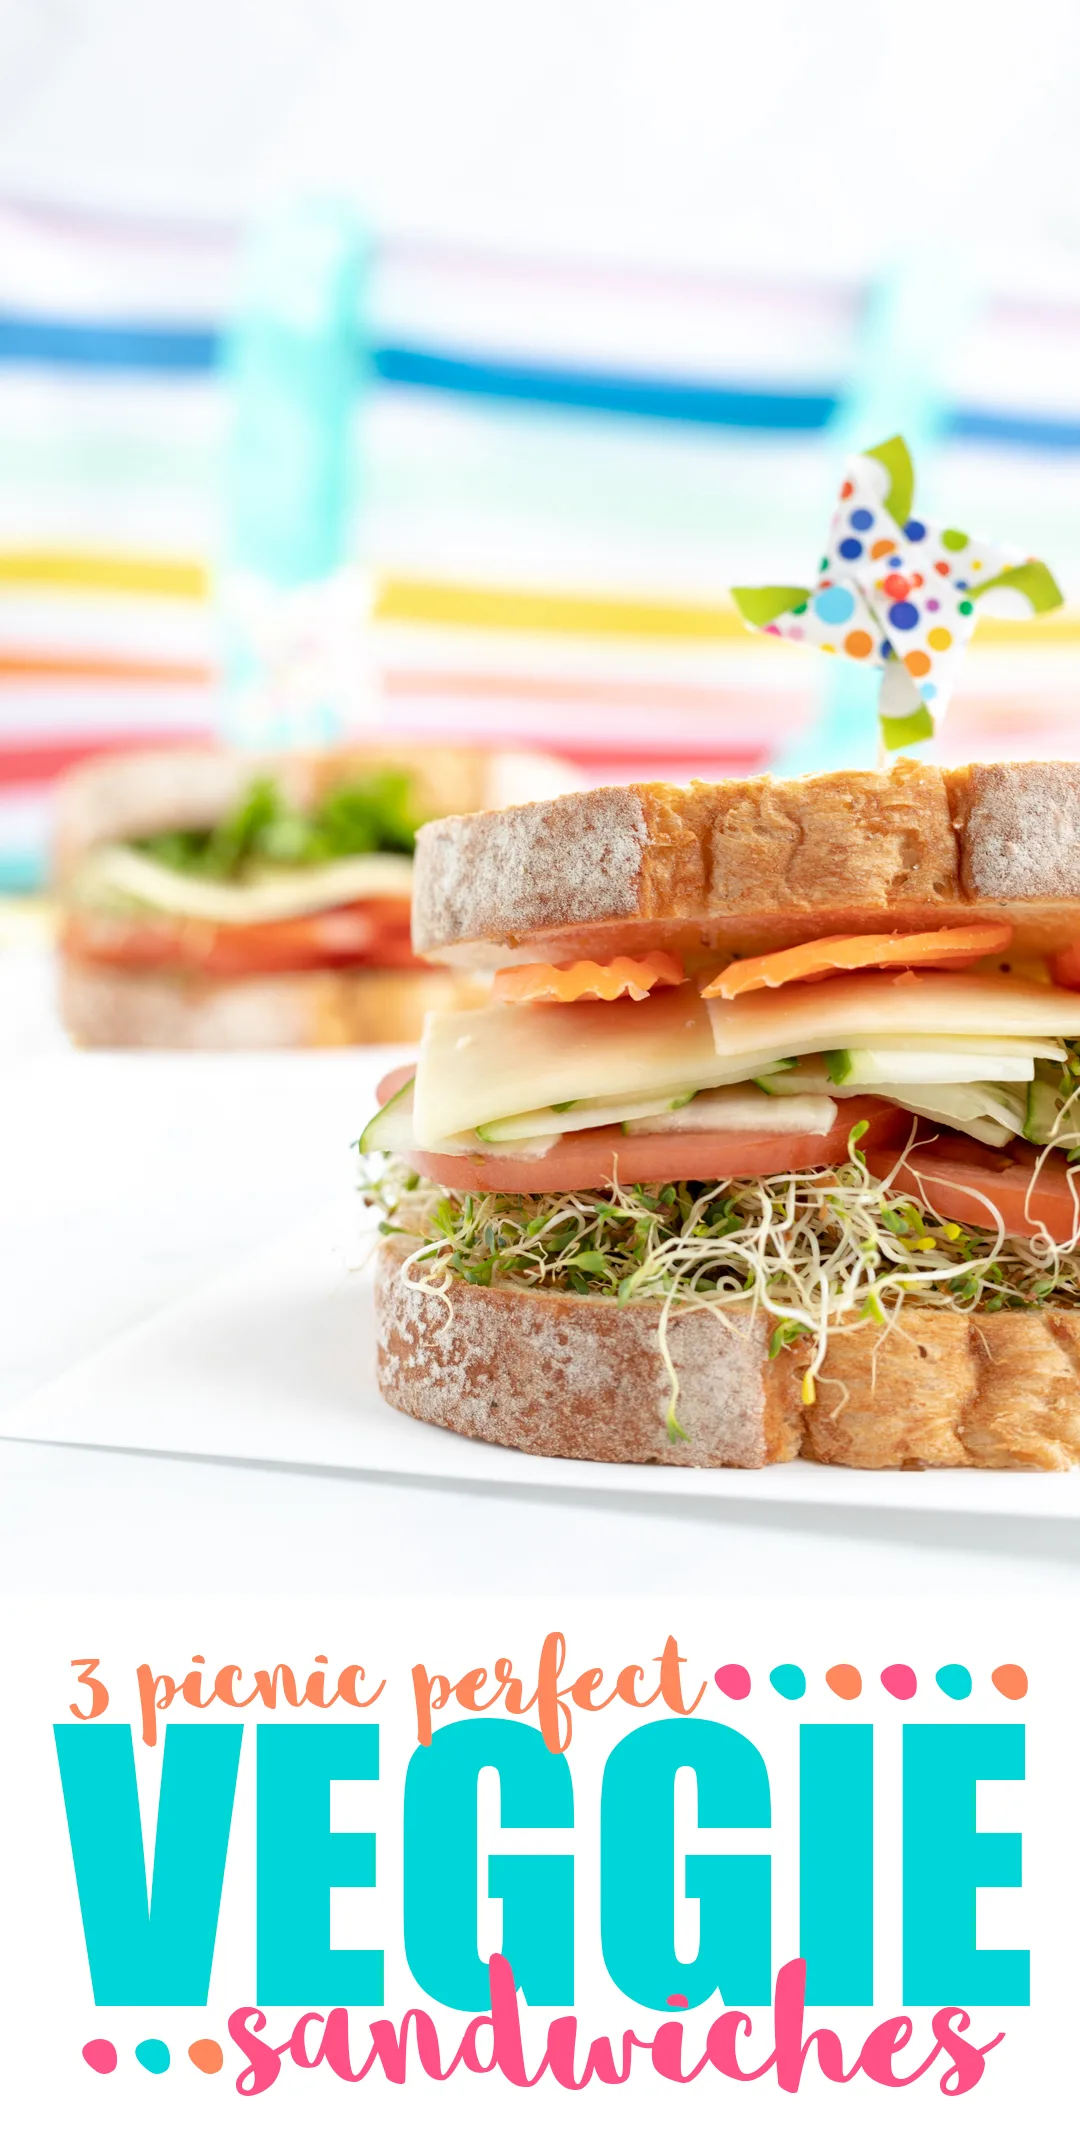 Picnic Sandwiches. Veggie packed sandwiches.